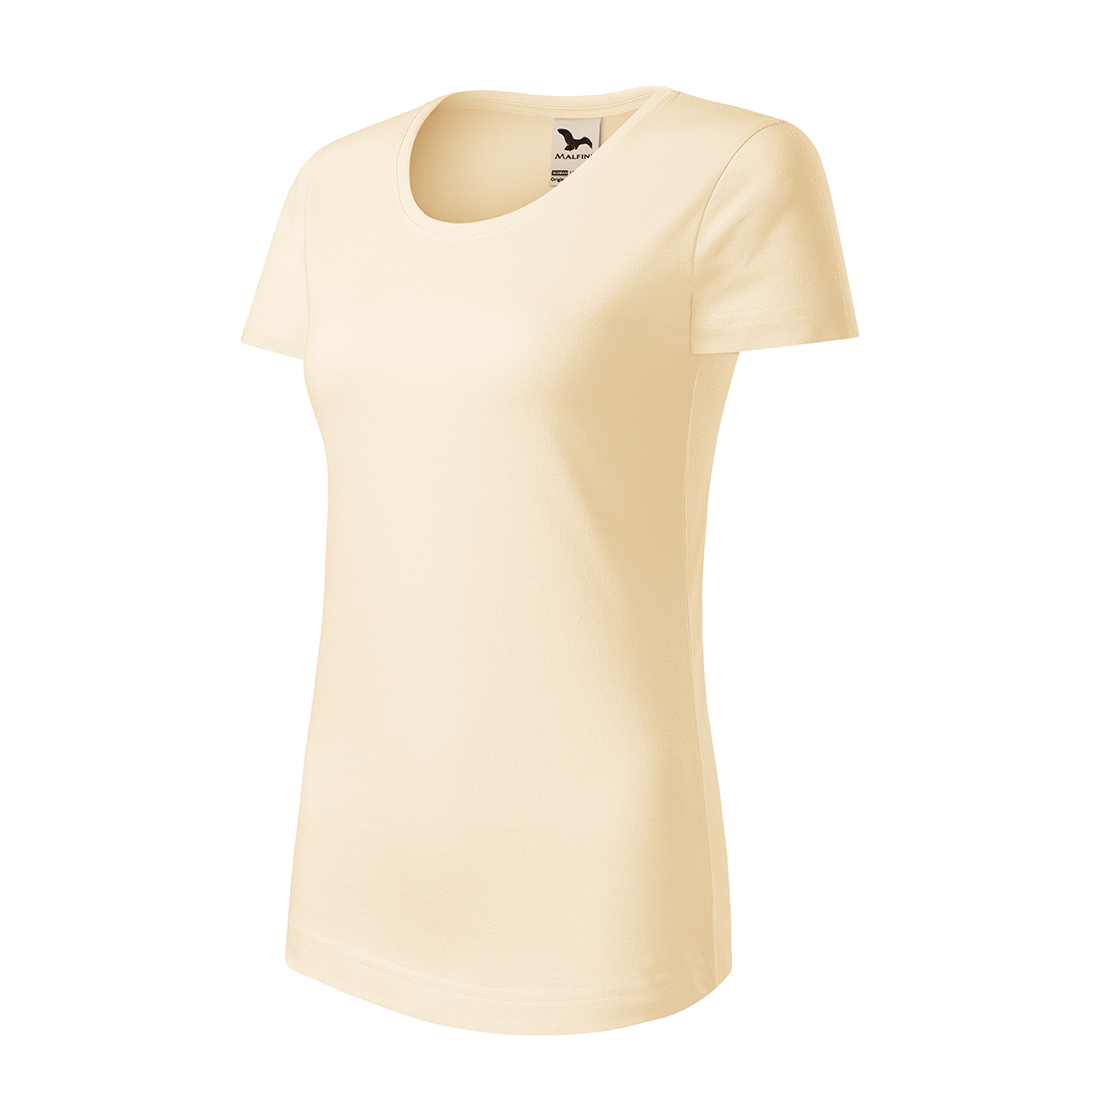 Organic Cotton Women's T-shirt - Safetywear